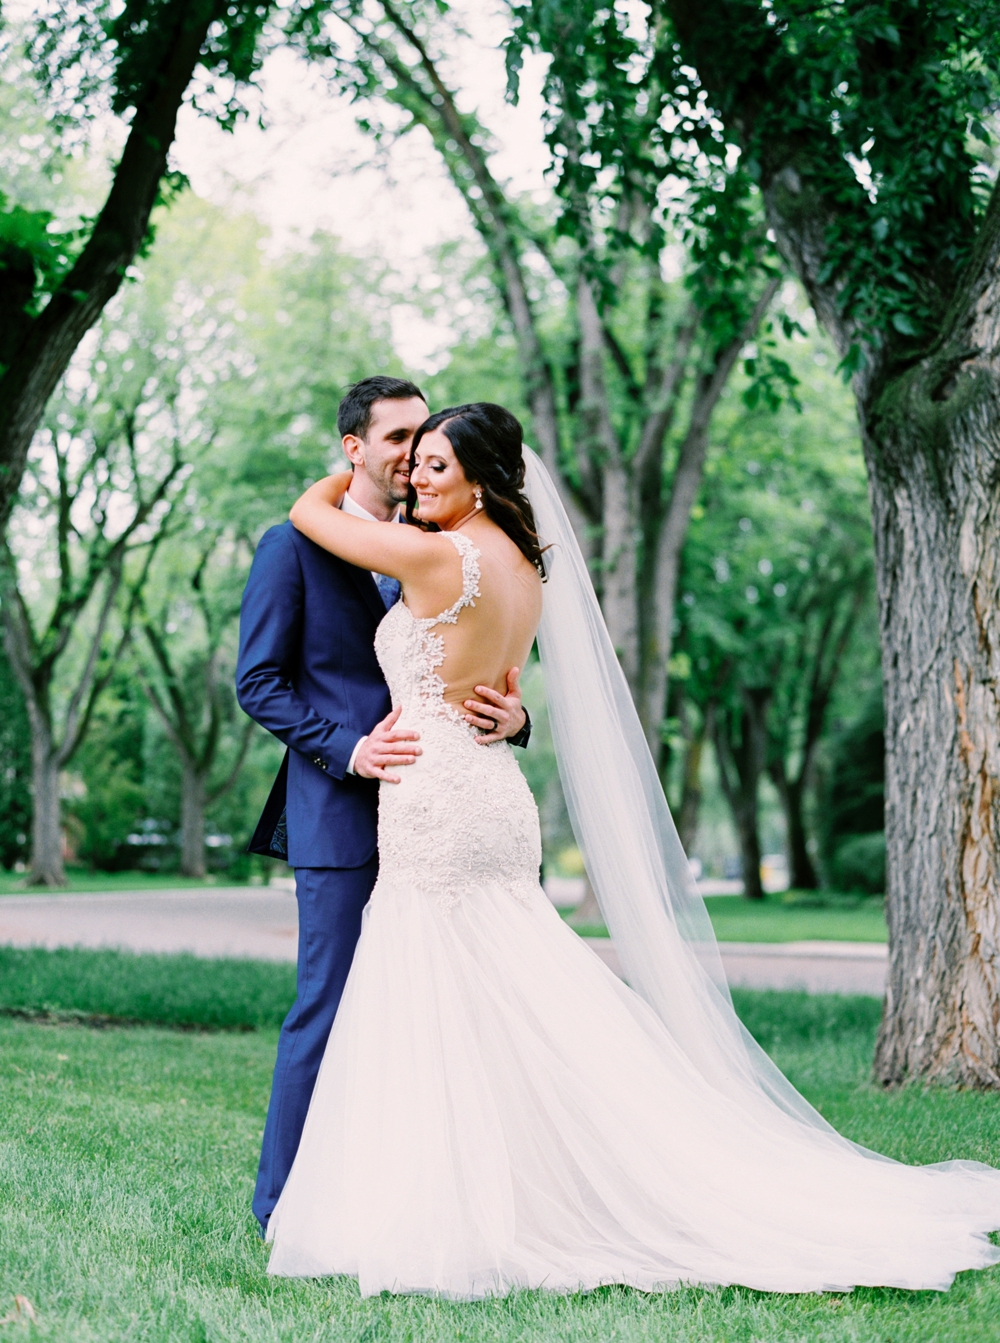 Calgary Wedding Photographers | Edmonton Wedding Photography | Millwoods Golf Course Wedding | Coral and Blush Neutral Wedding